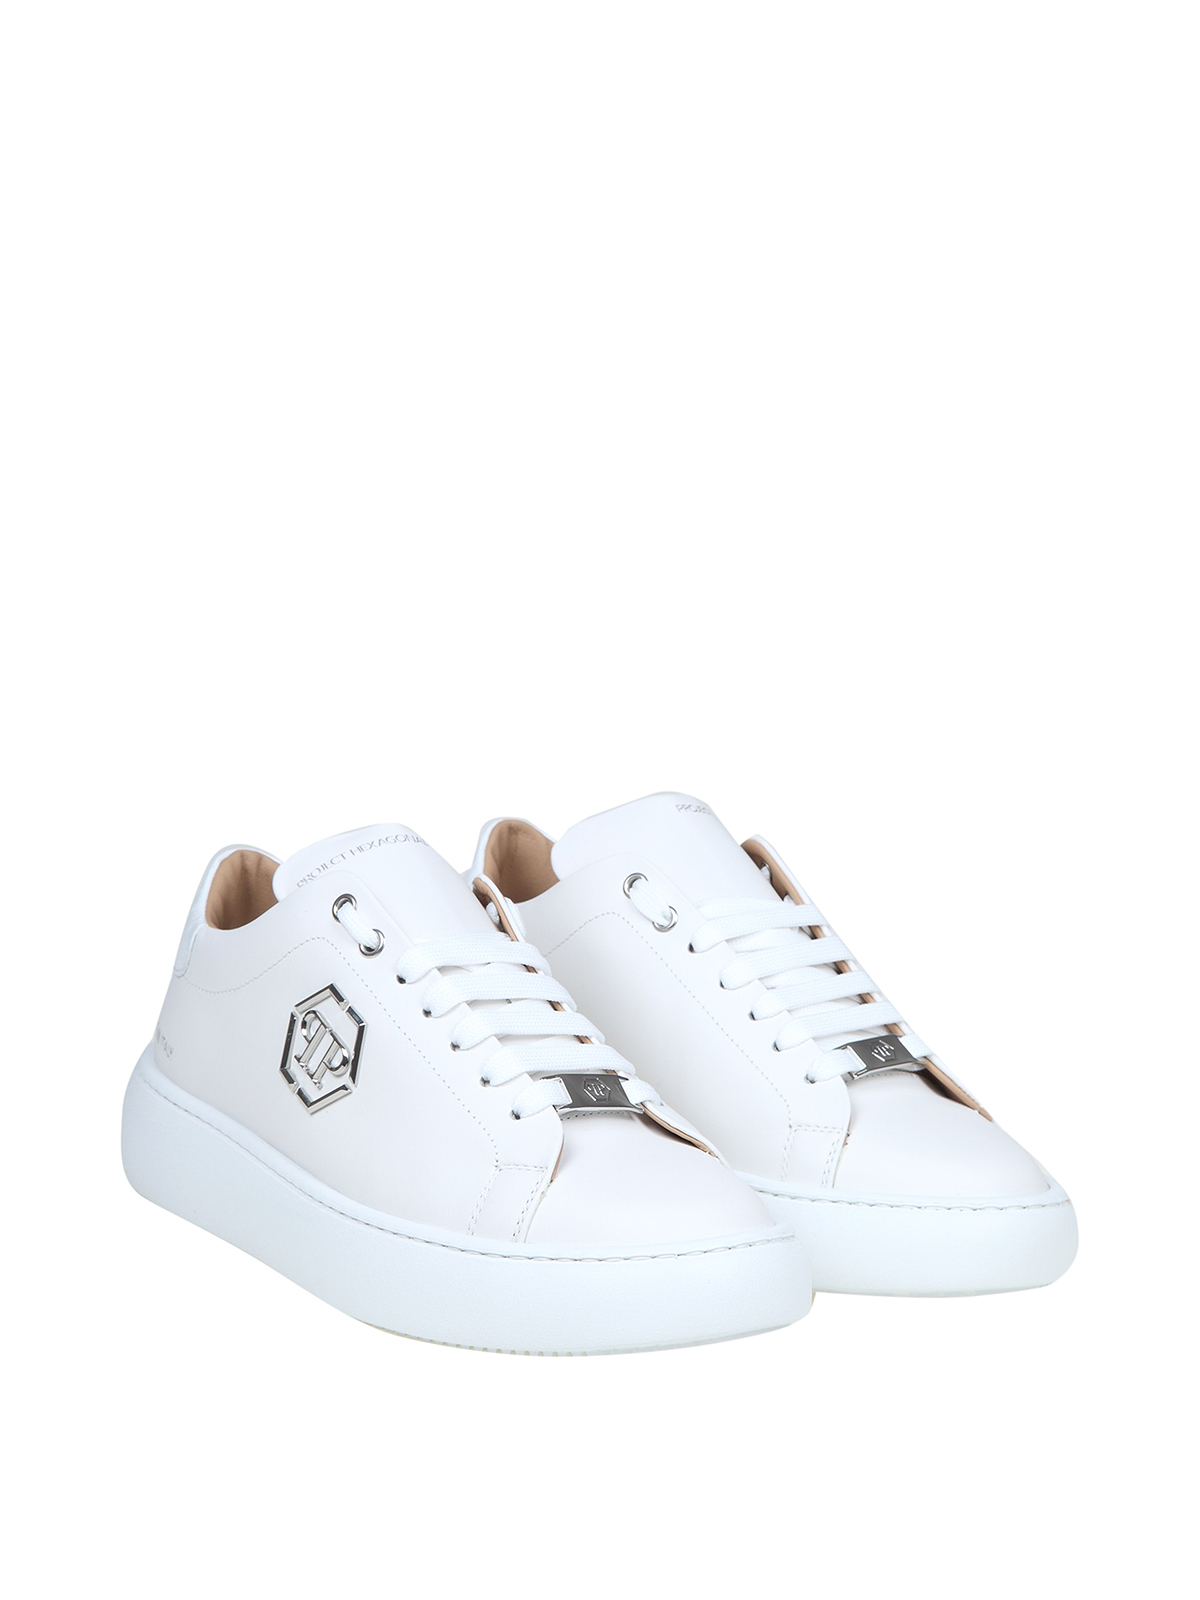 Philipp Plein - sneakers in white leather - MSC3810PLE075N0101